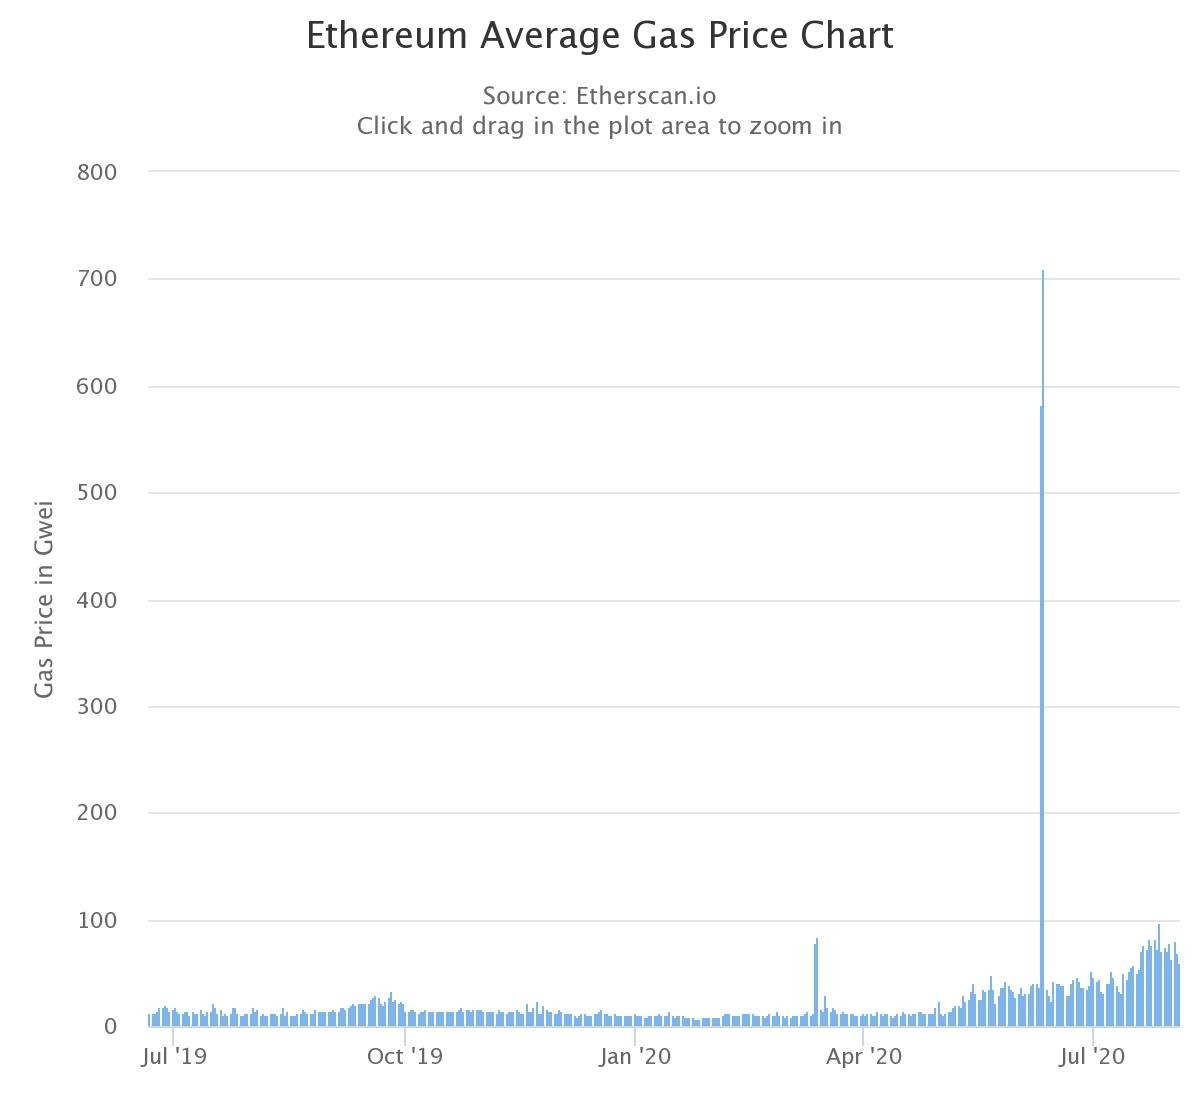 Grafik harga gas rata-rata Ethereum. Sumber: Etherscan